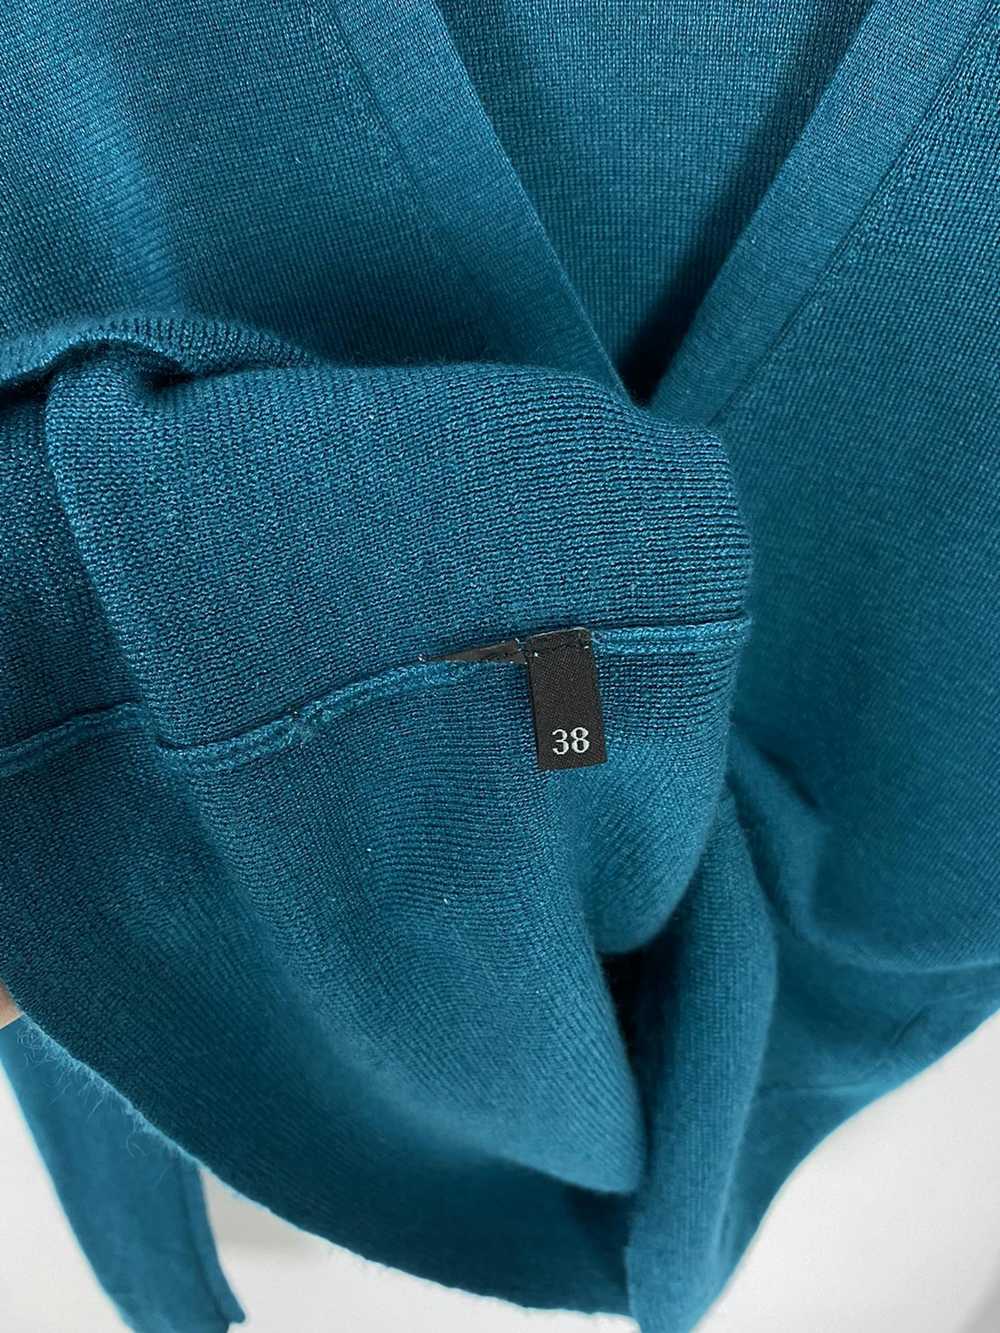 Luxury × Prada Prada Milano Wool Cardigan Sweater - image 7